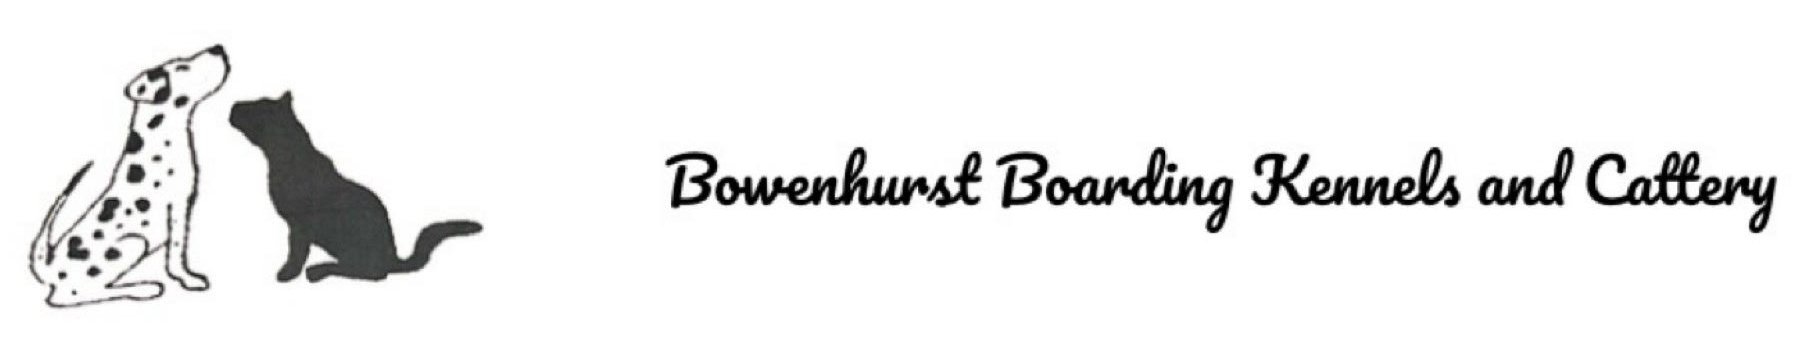 Bowenhurst logo